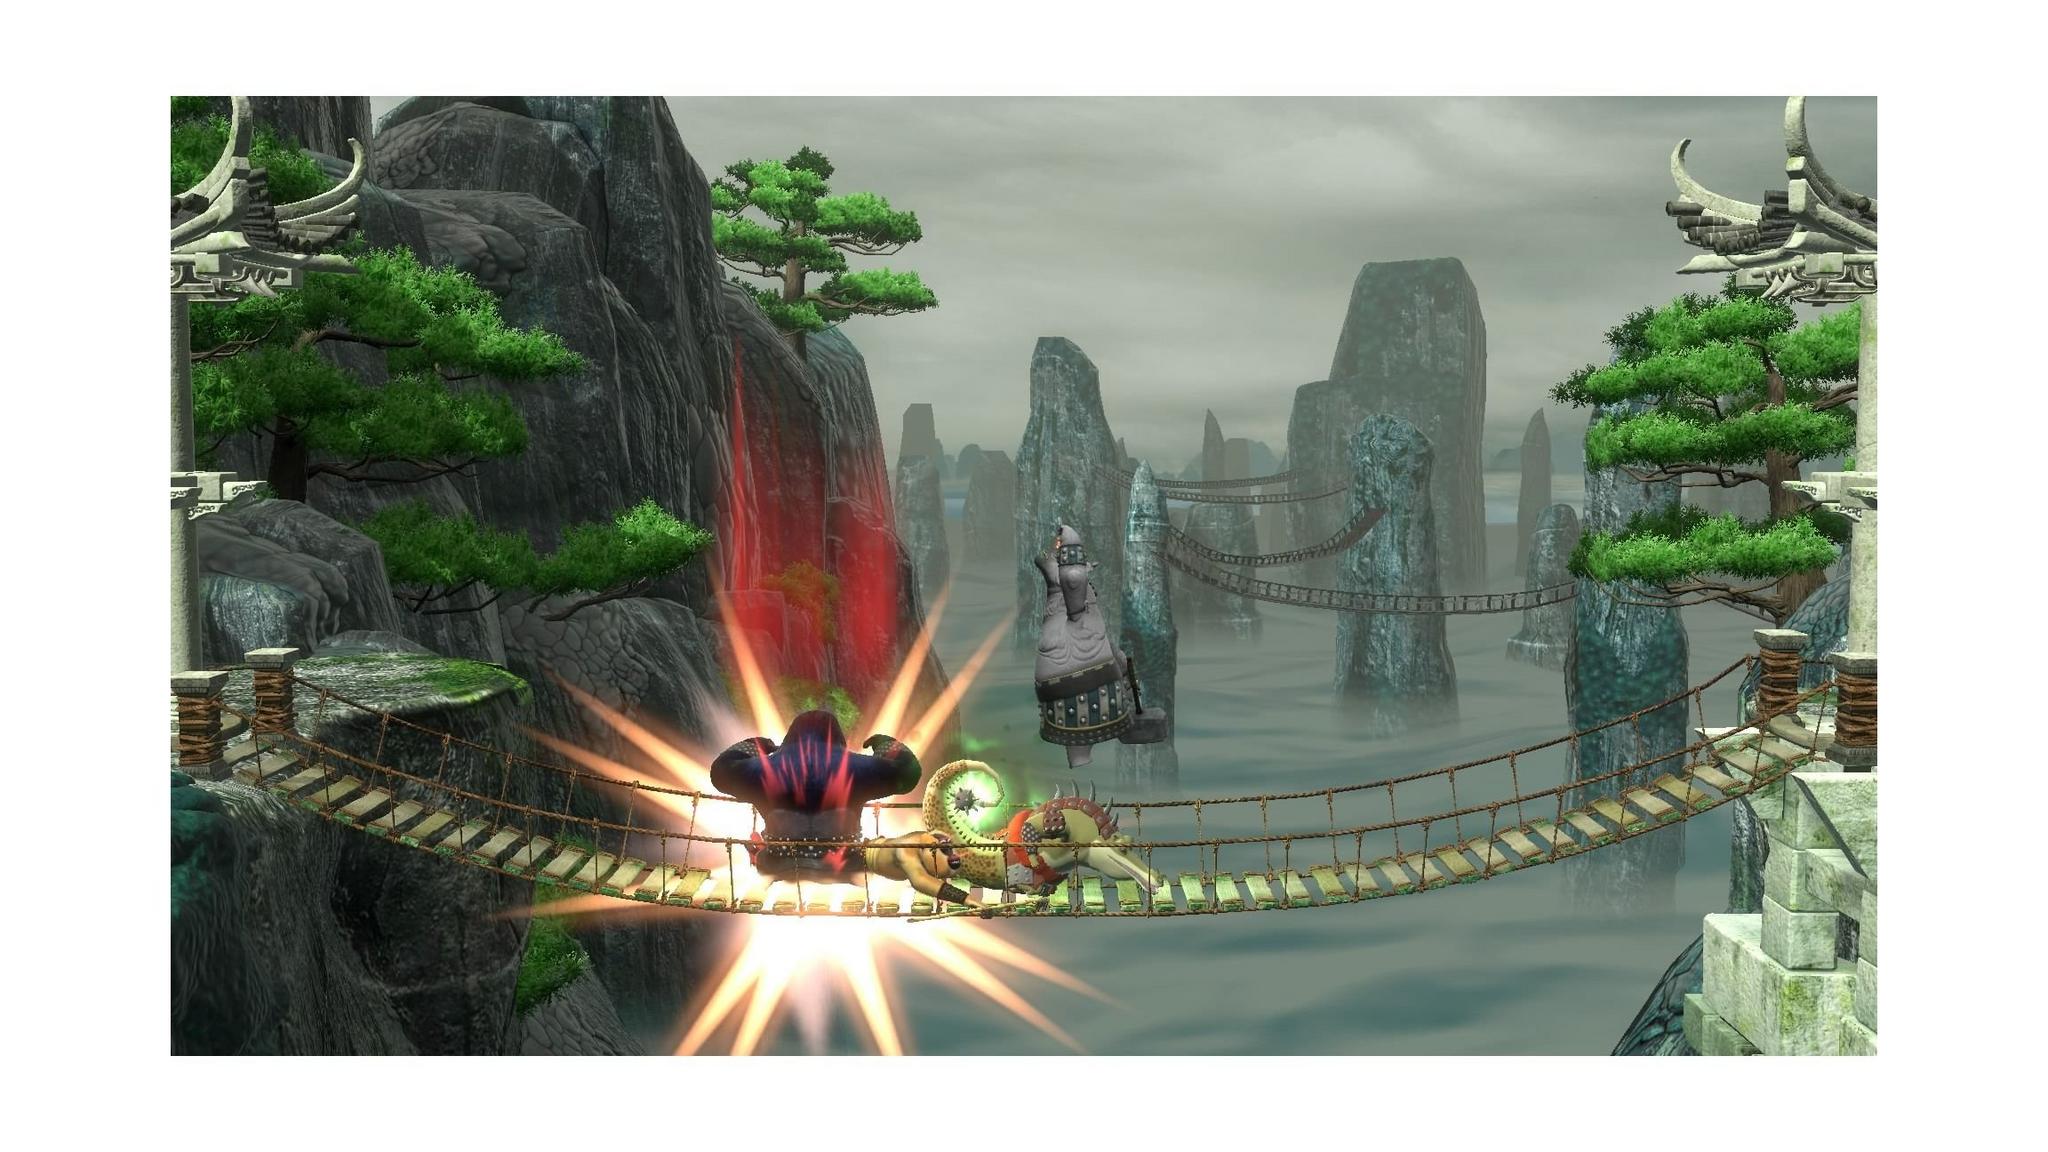 Kung Fu Panda: Showdown of Legendary Legends - PlayStation 4 Game